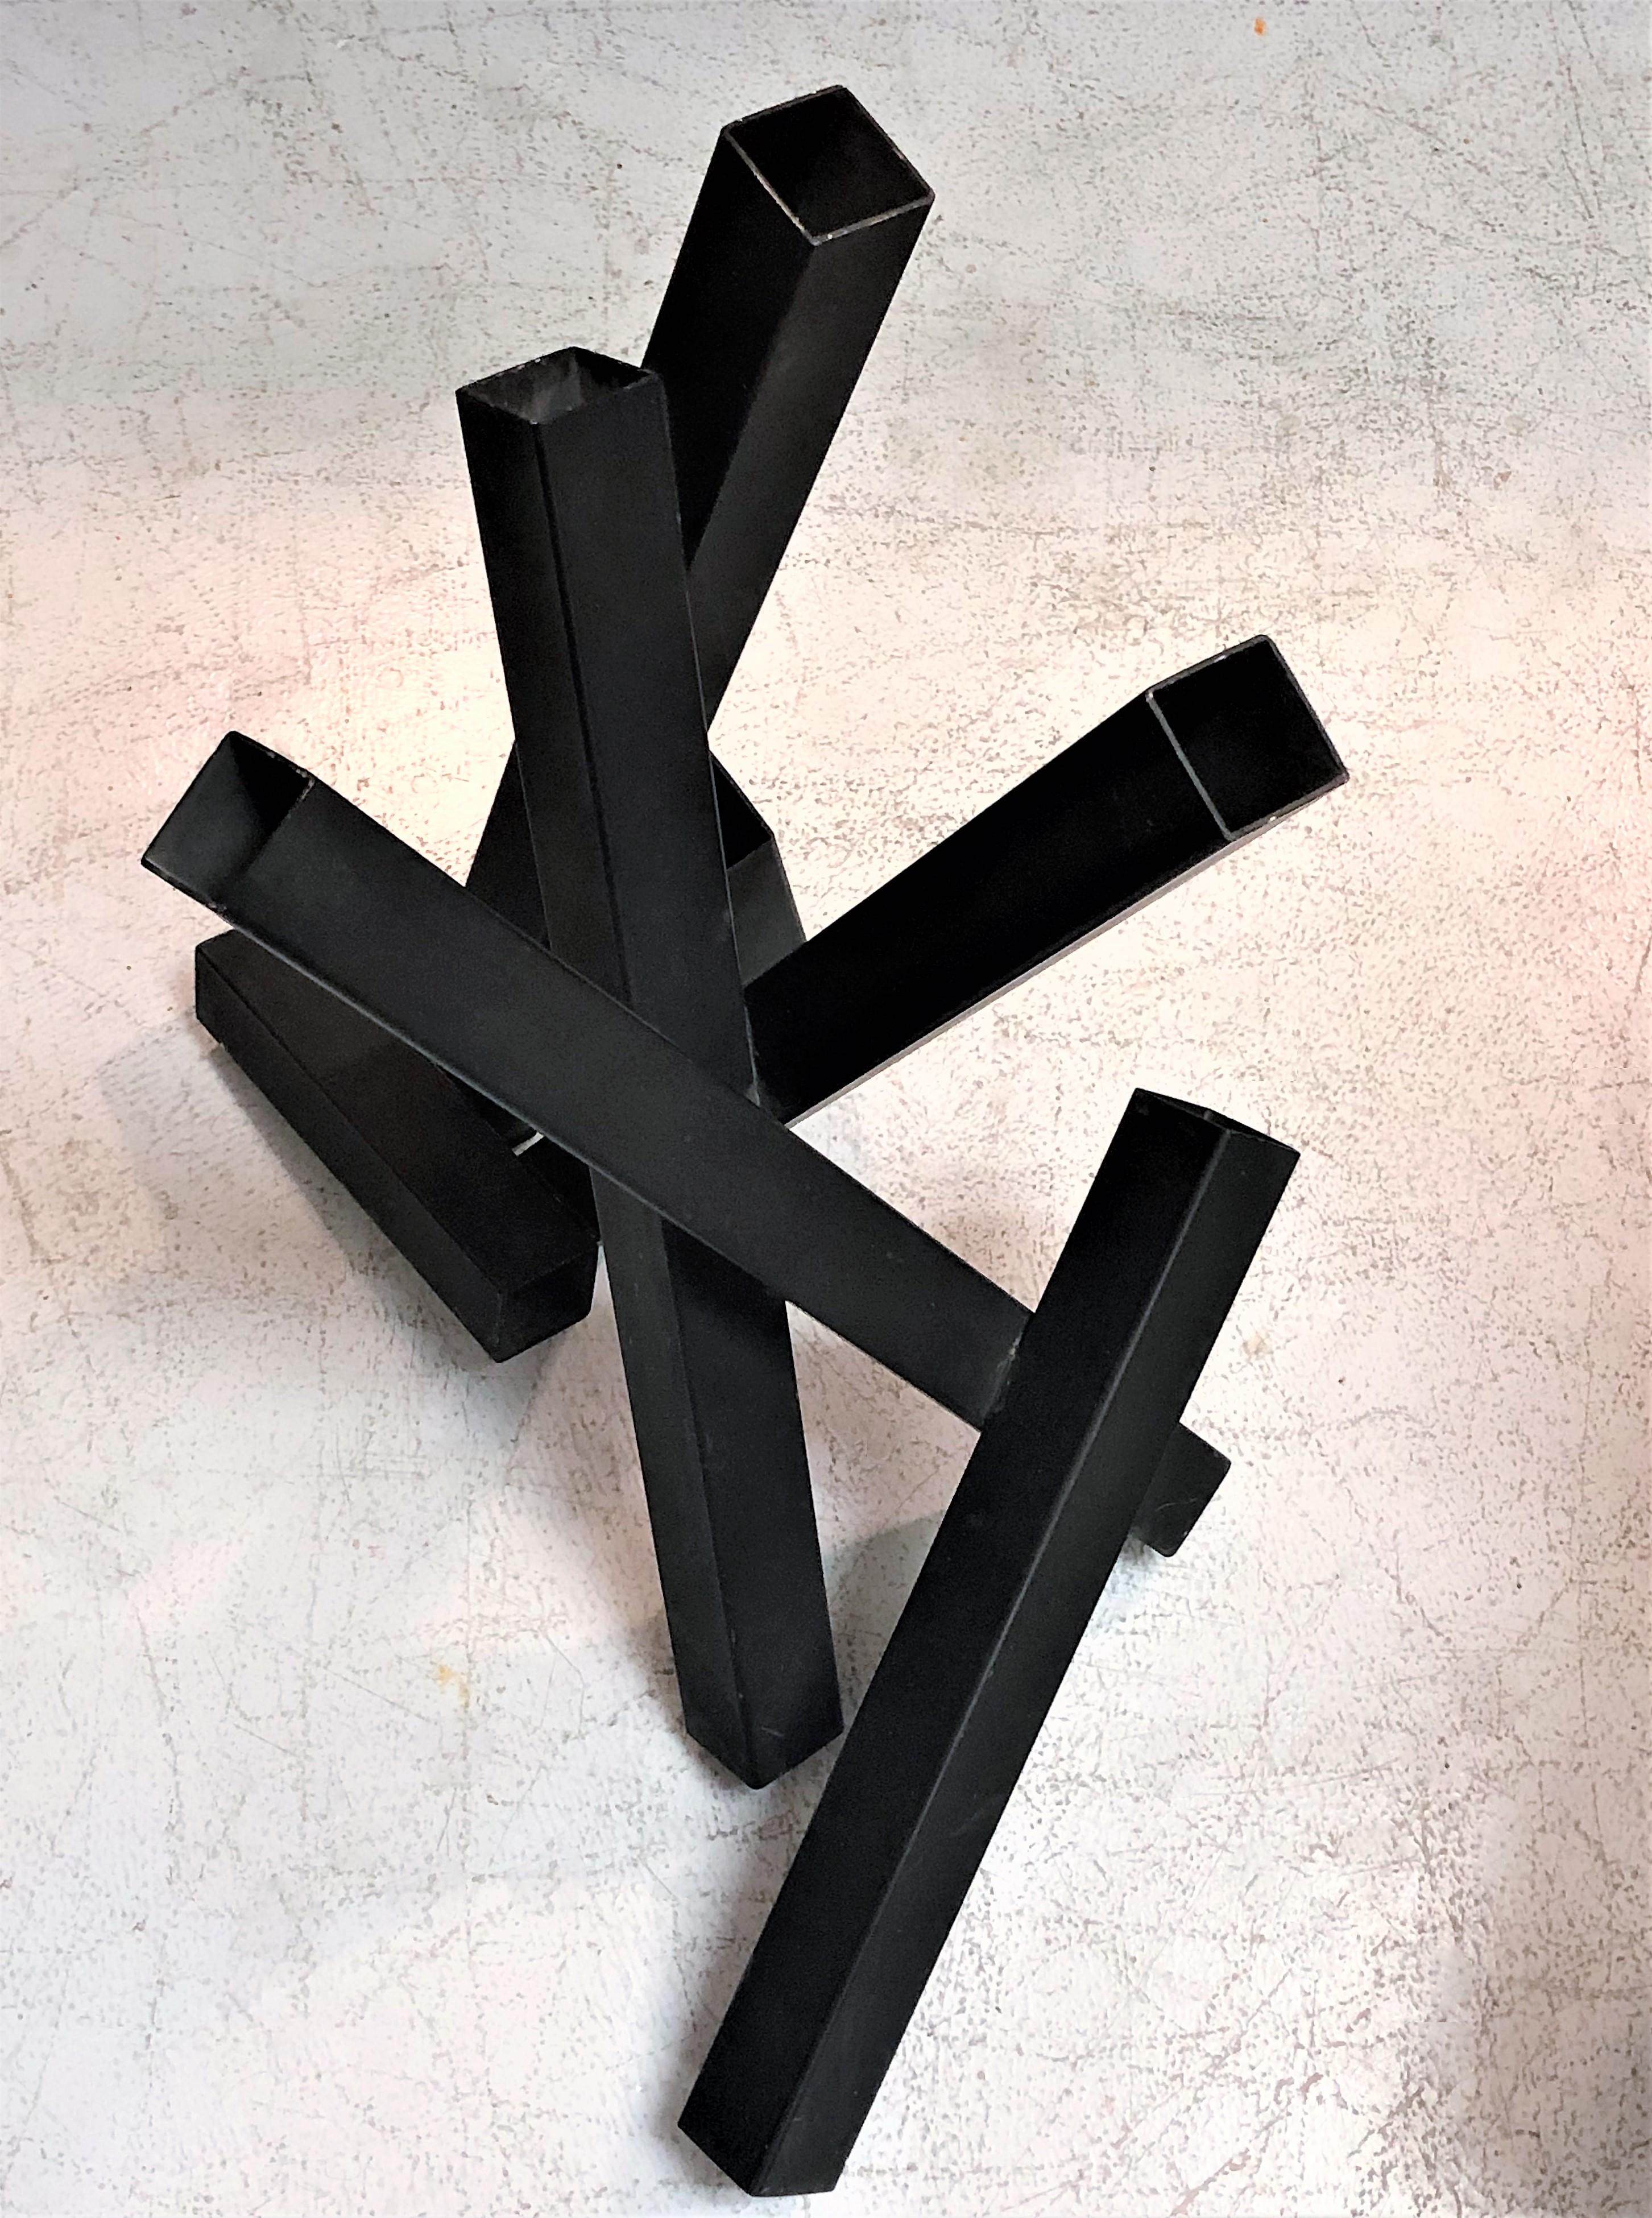 Tony Rosenthal Abstract Steel and Black Enamel Sculpture (amerikanisch)